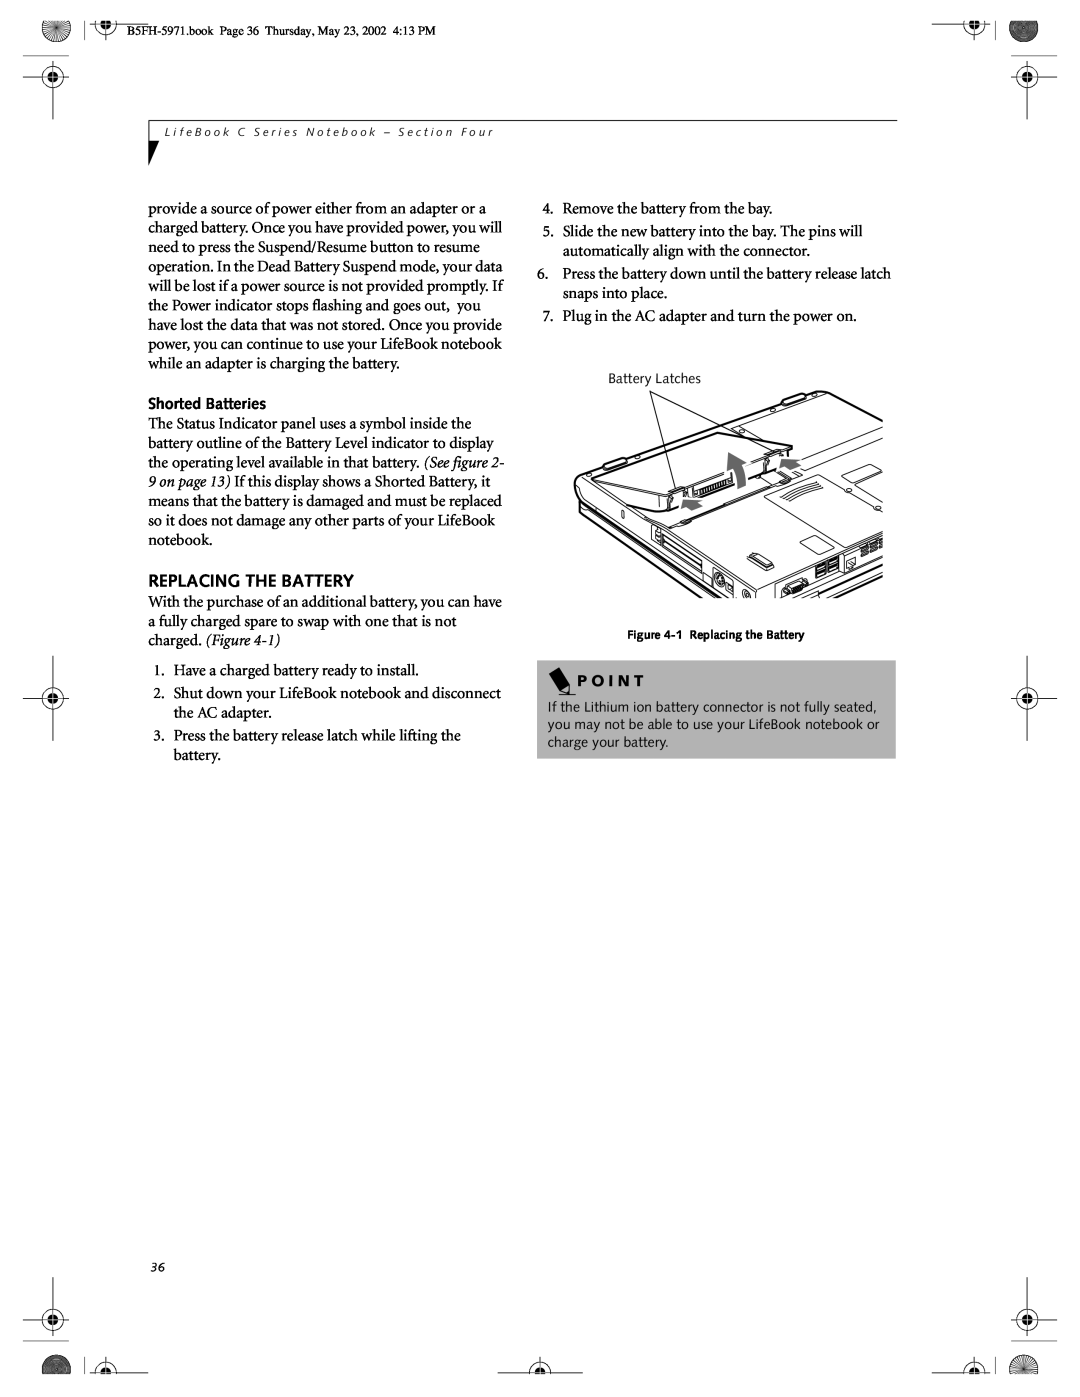 Fujitsu C2111, C2010 manual Replacing The Battery, Shorted Batteries, P O I N T 